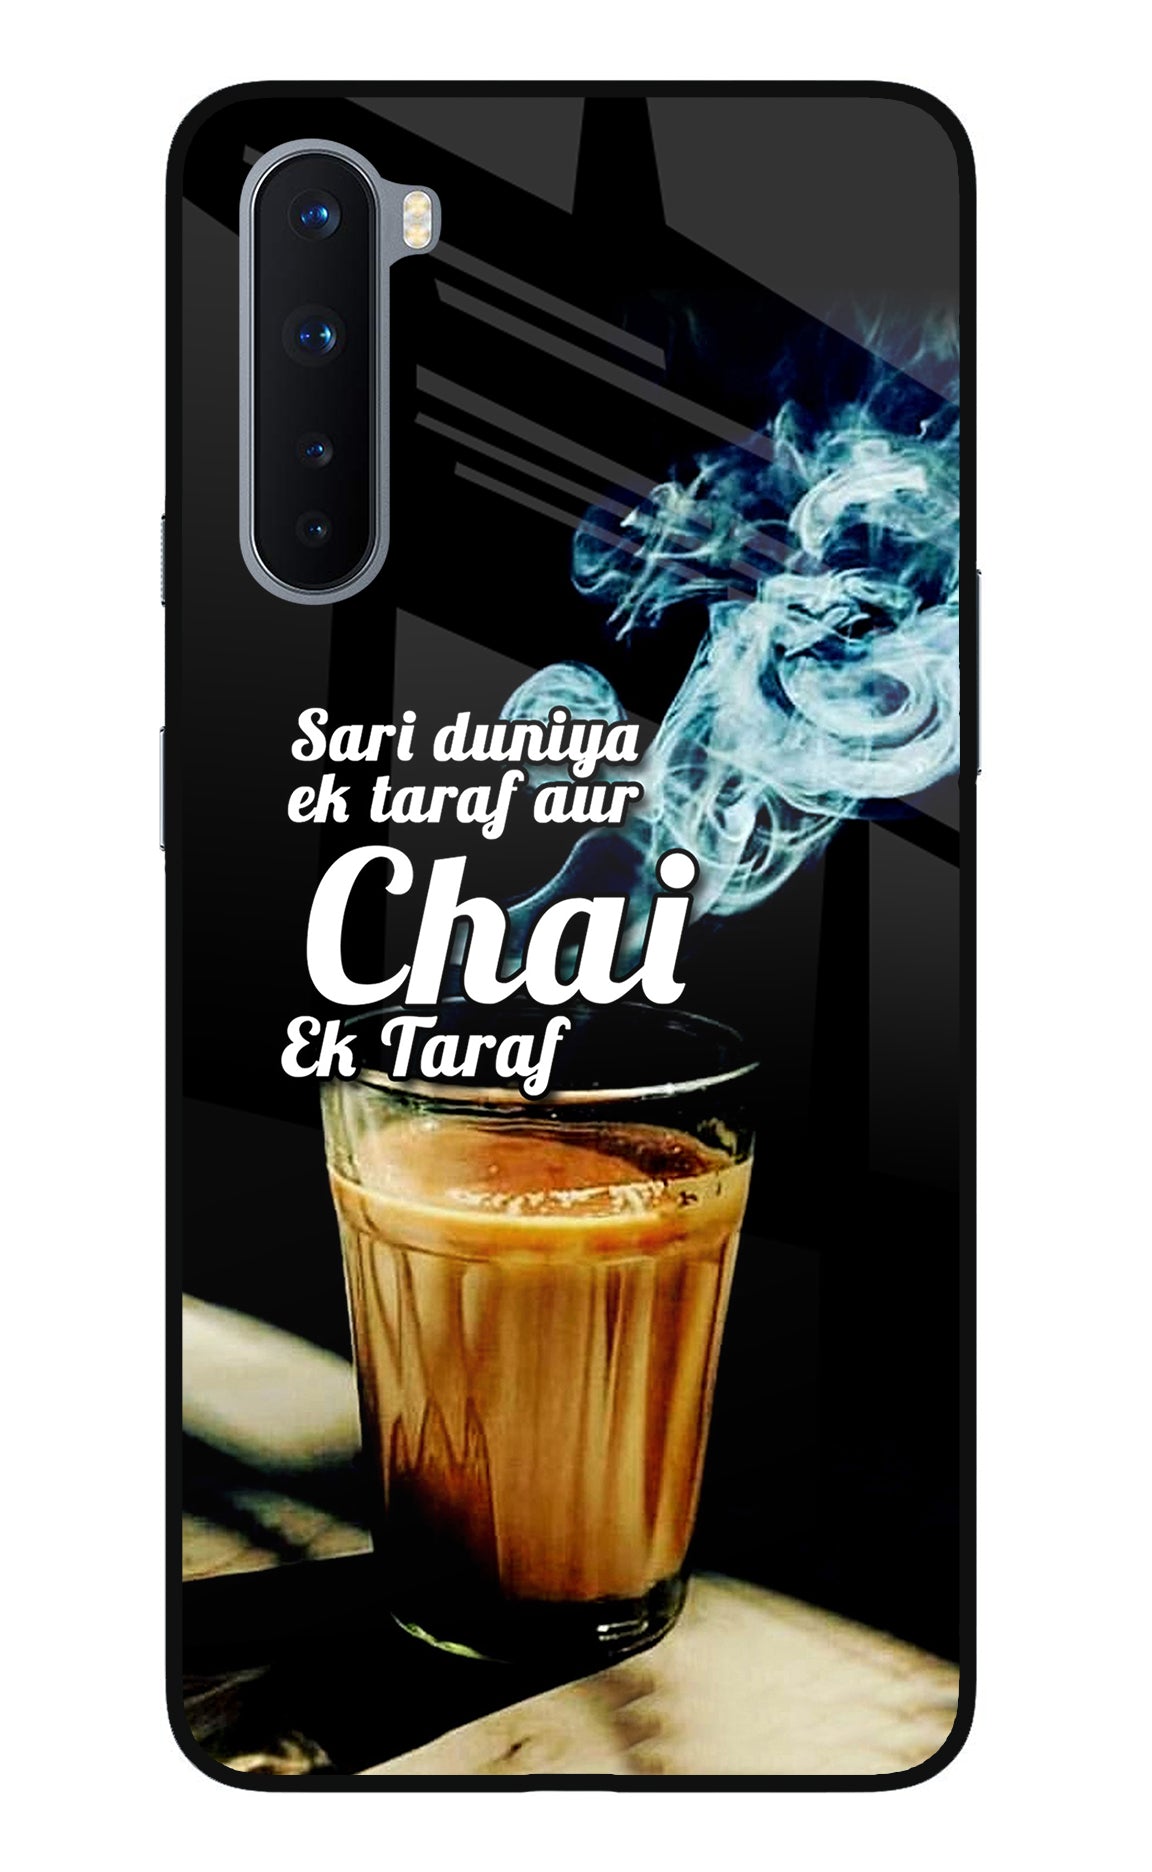 Chai Ek Taraf Quote Oneplus Nord Glass Case